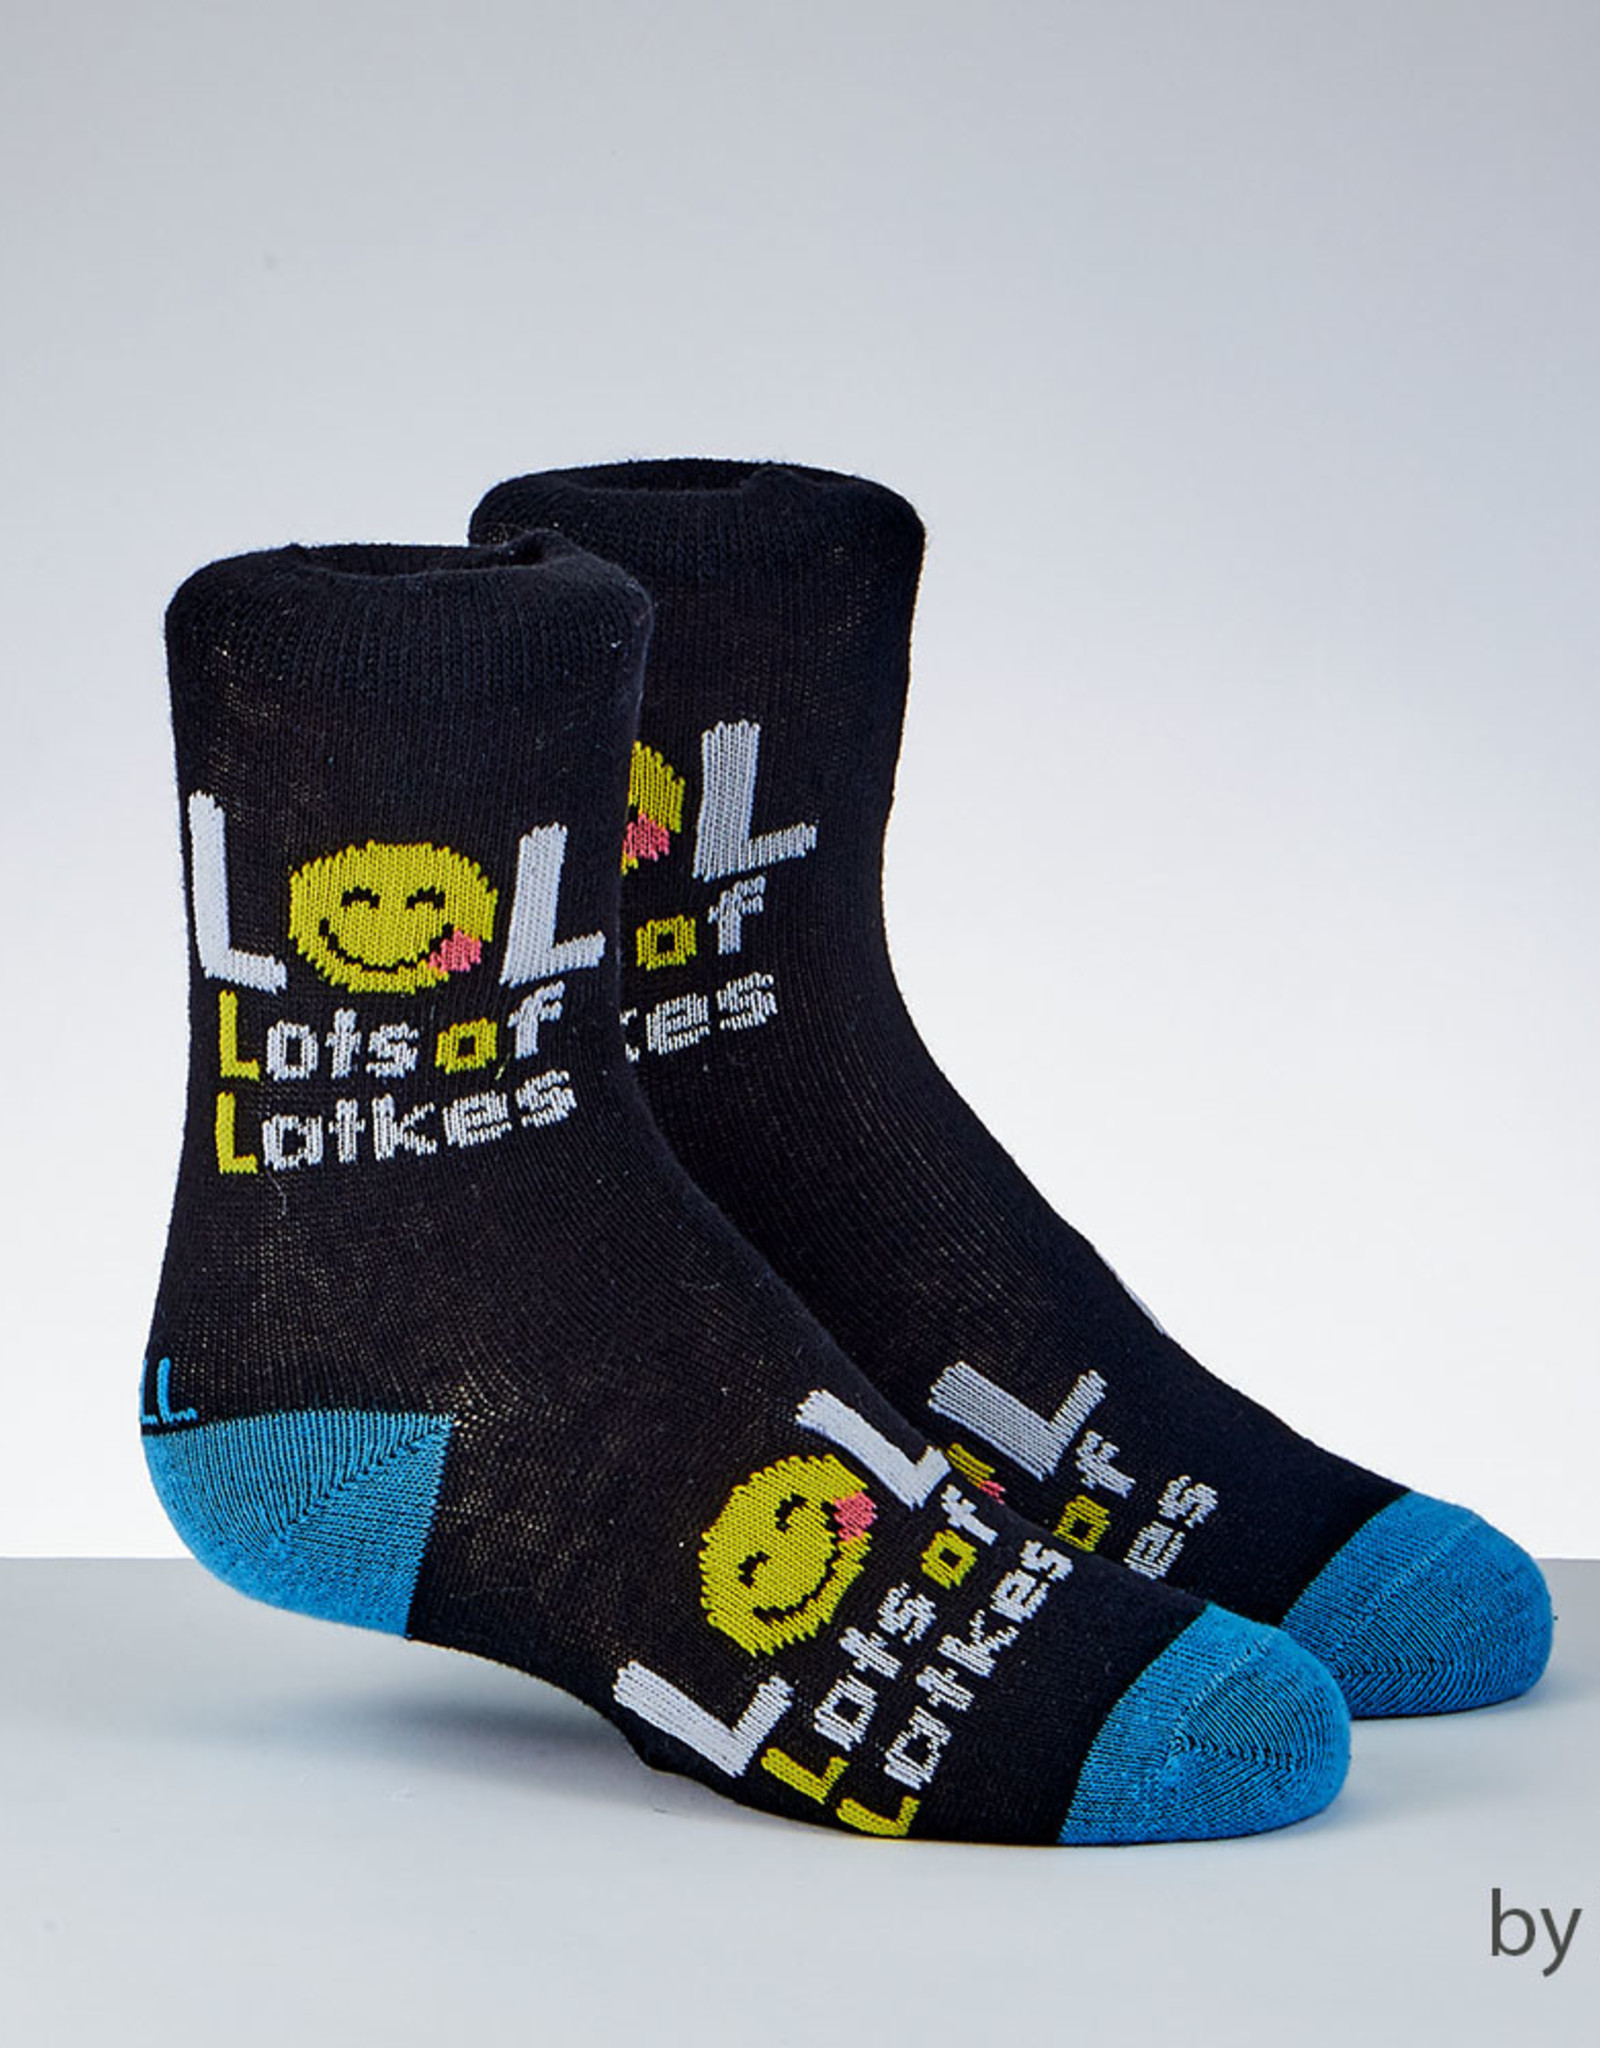 Chanukah Kids Crew Socks (size 11-1)Lots of Latkes